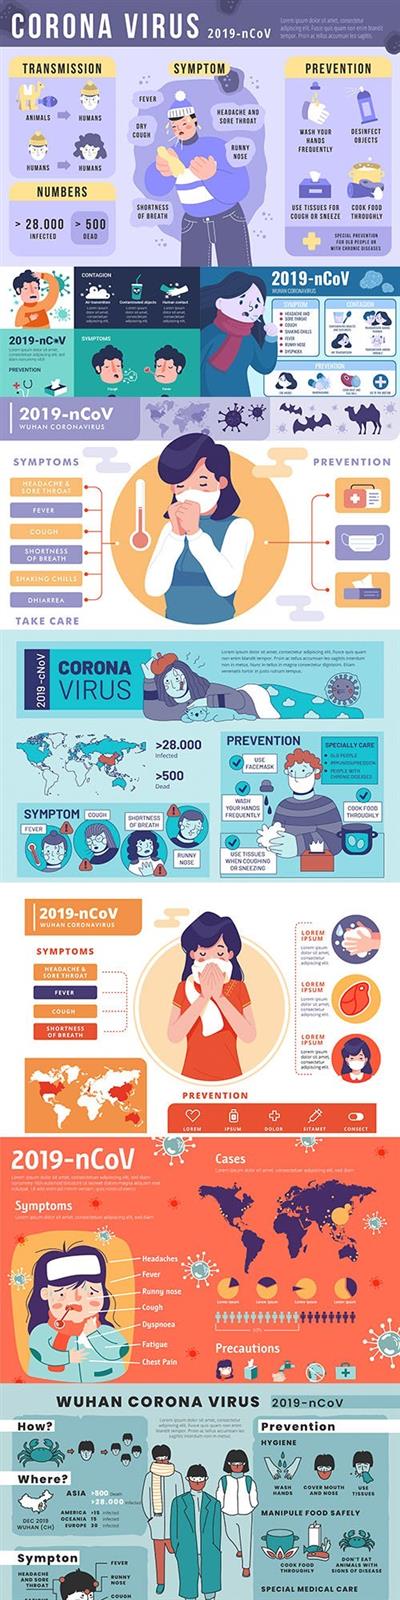 Coronavirus 2019 symptoms and infographic infection